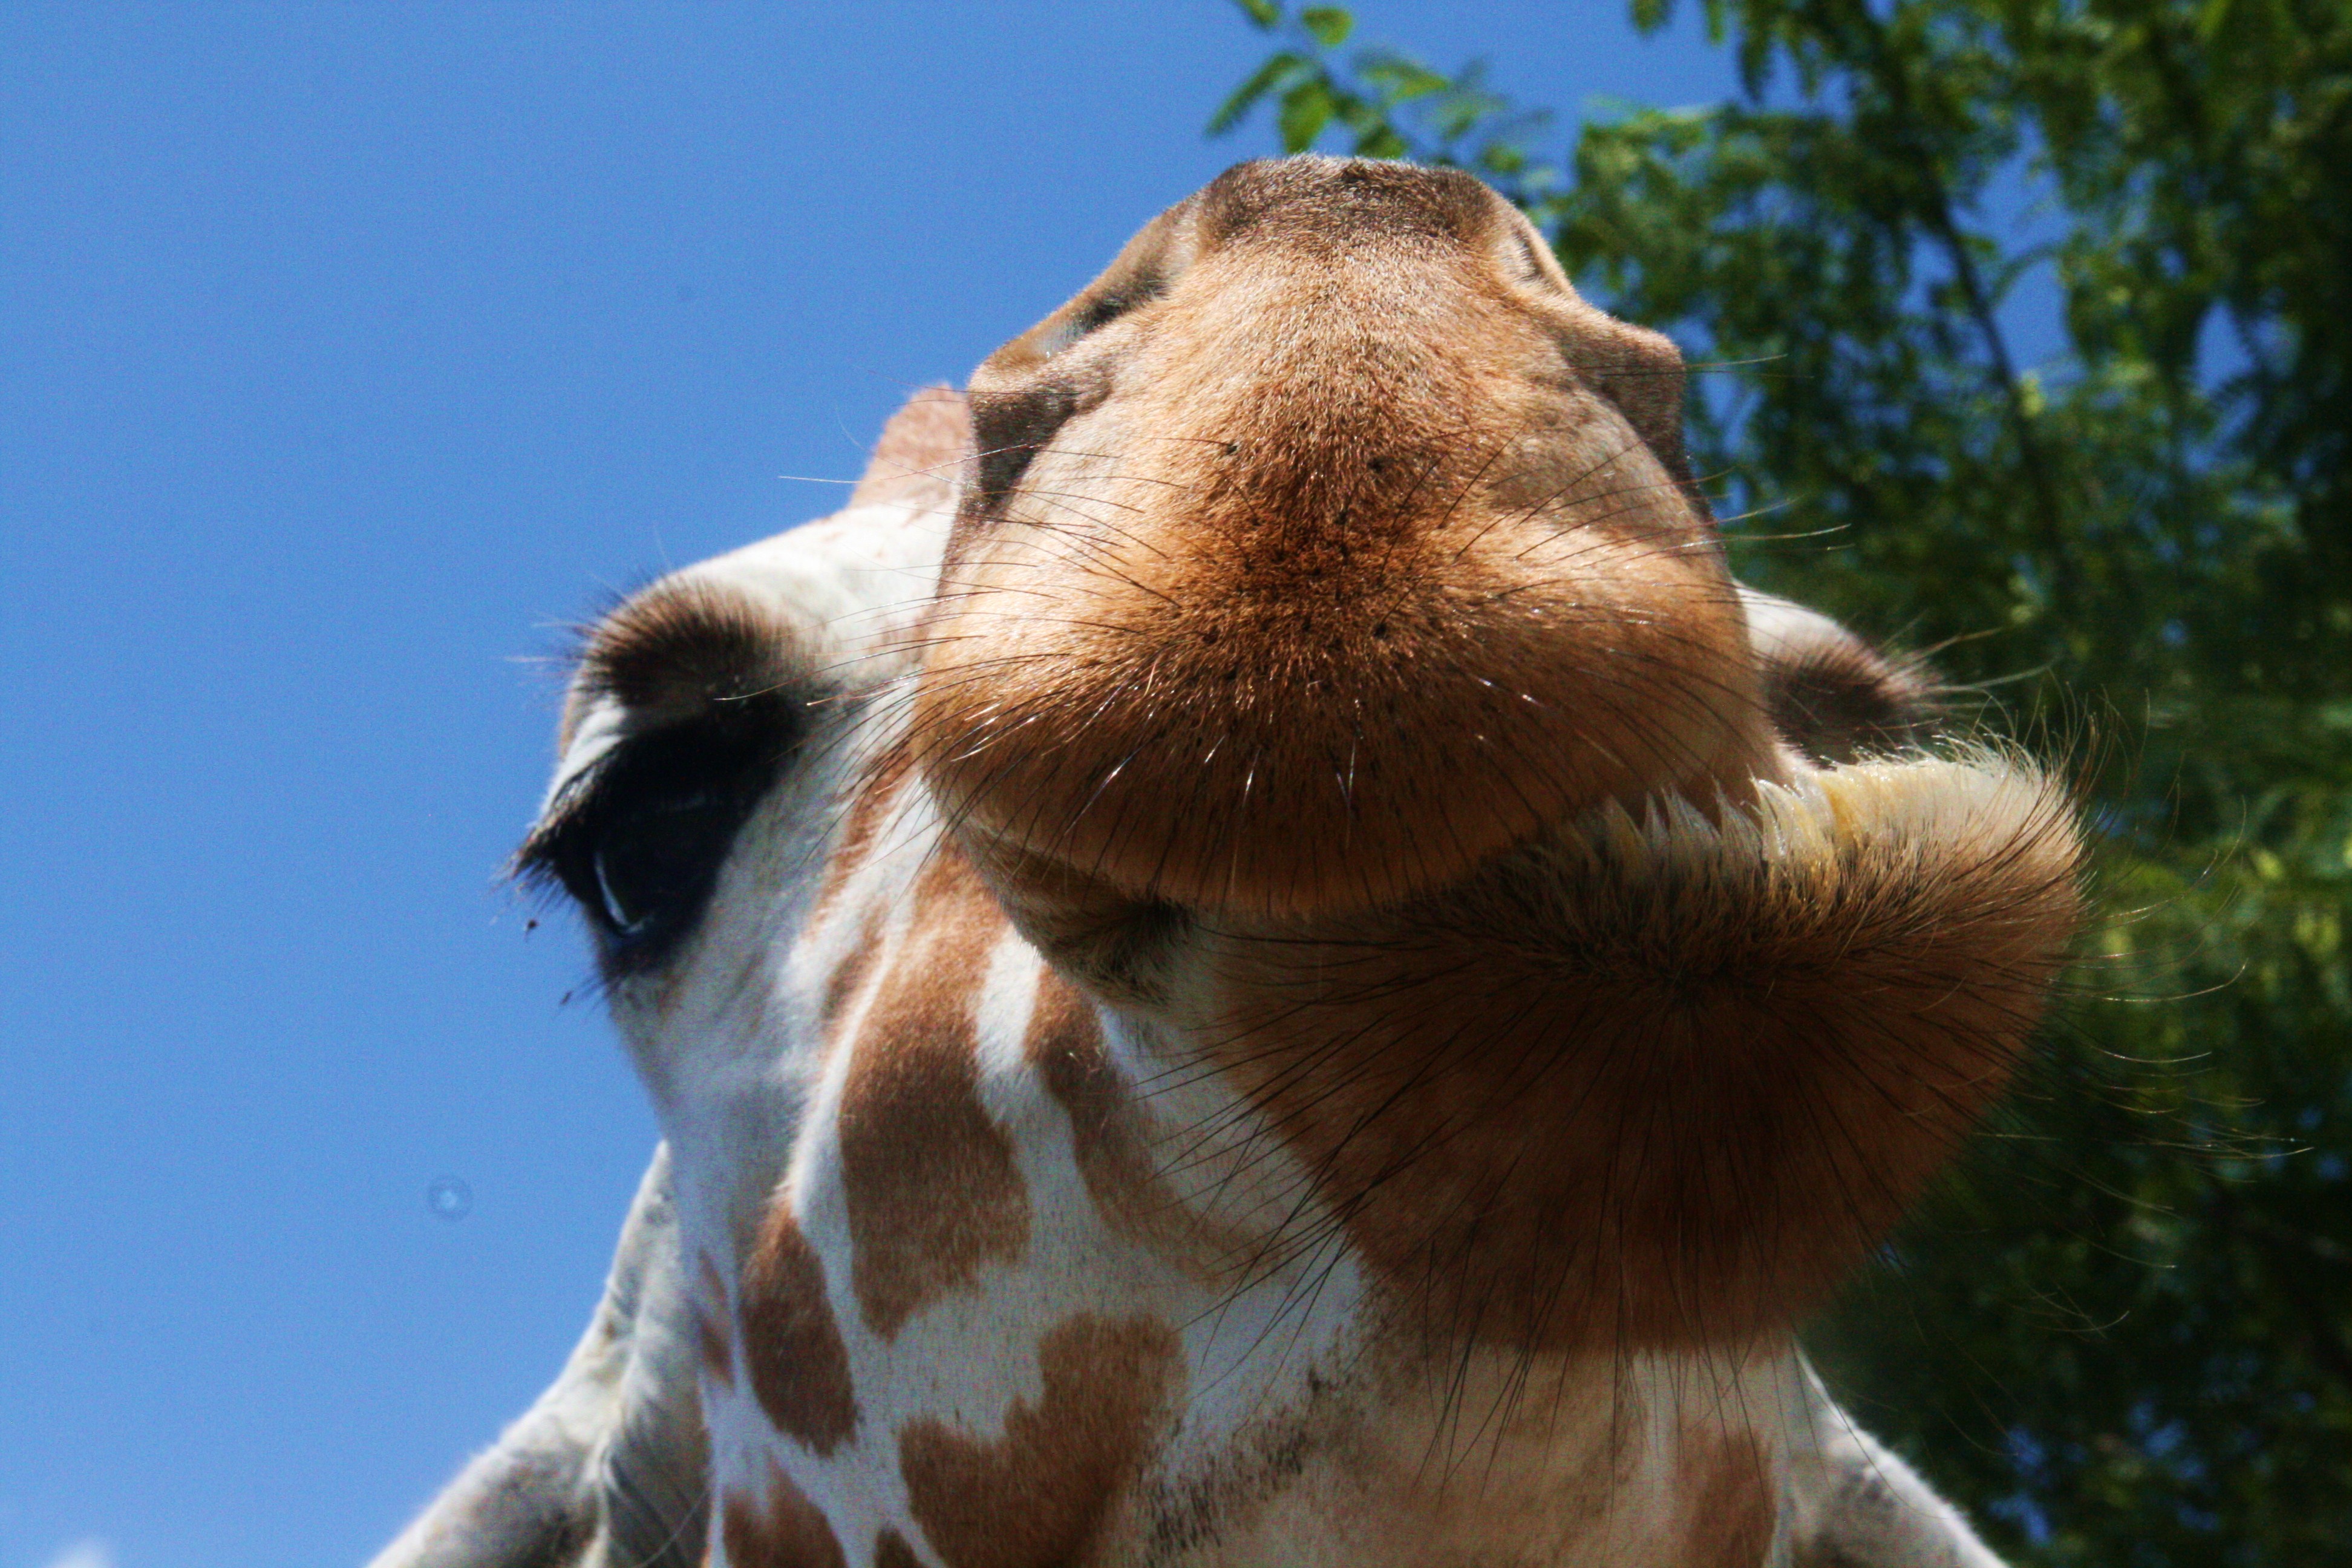 Giraffe Up Close 3 by AllyLovesPearls-x on DeviantArt